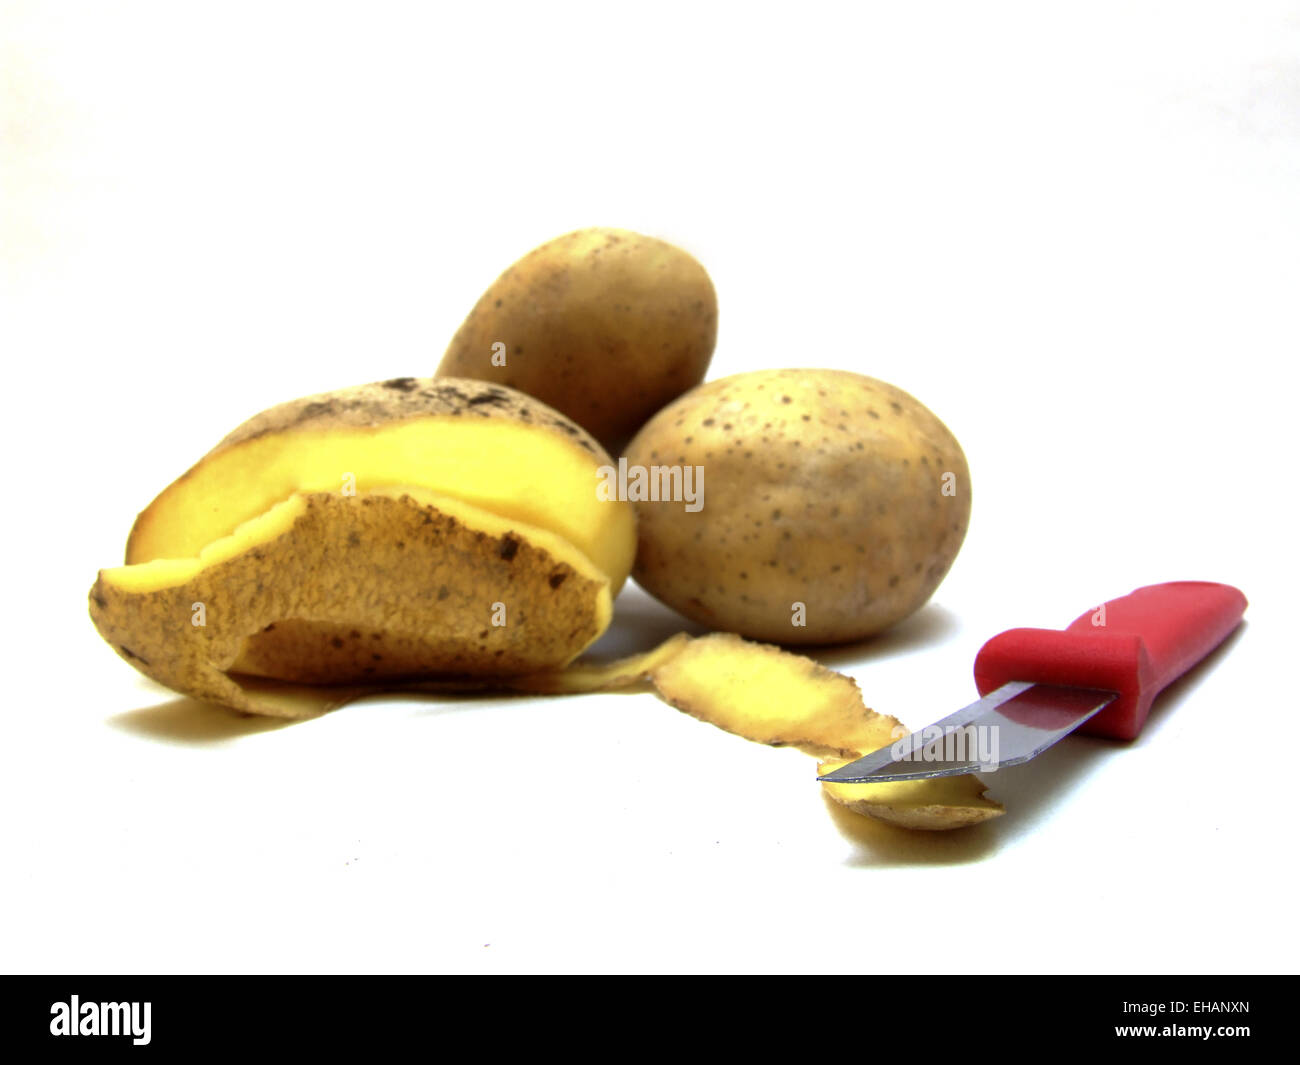 schälen / to shell potatoes Stock Photo